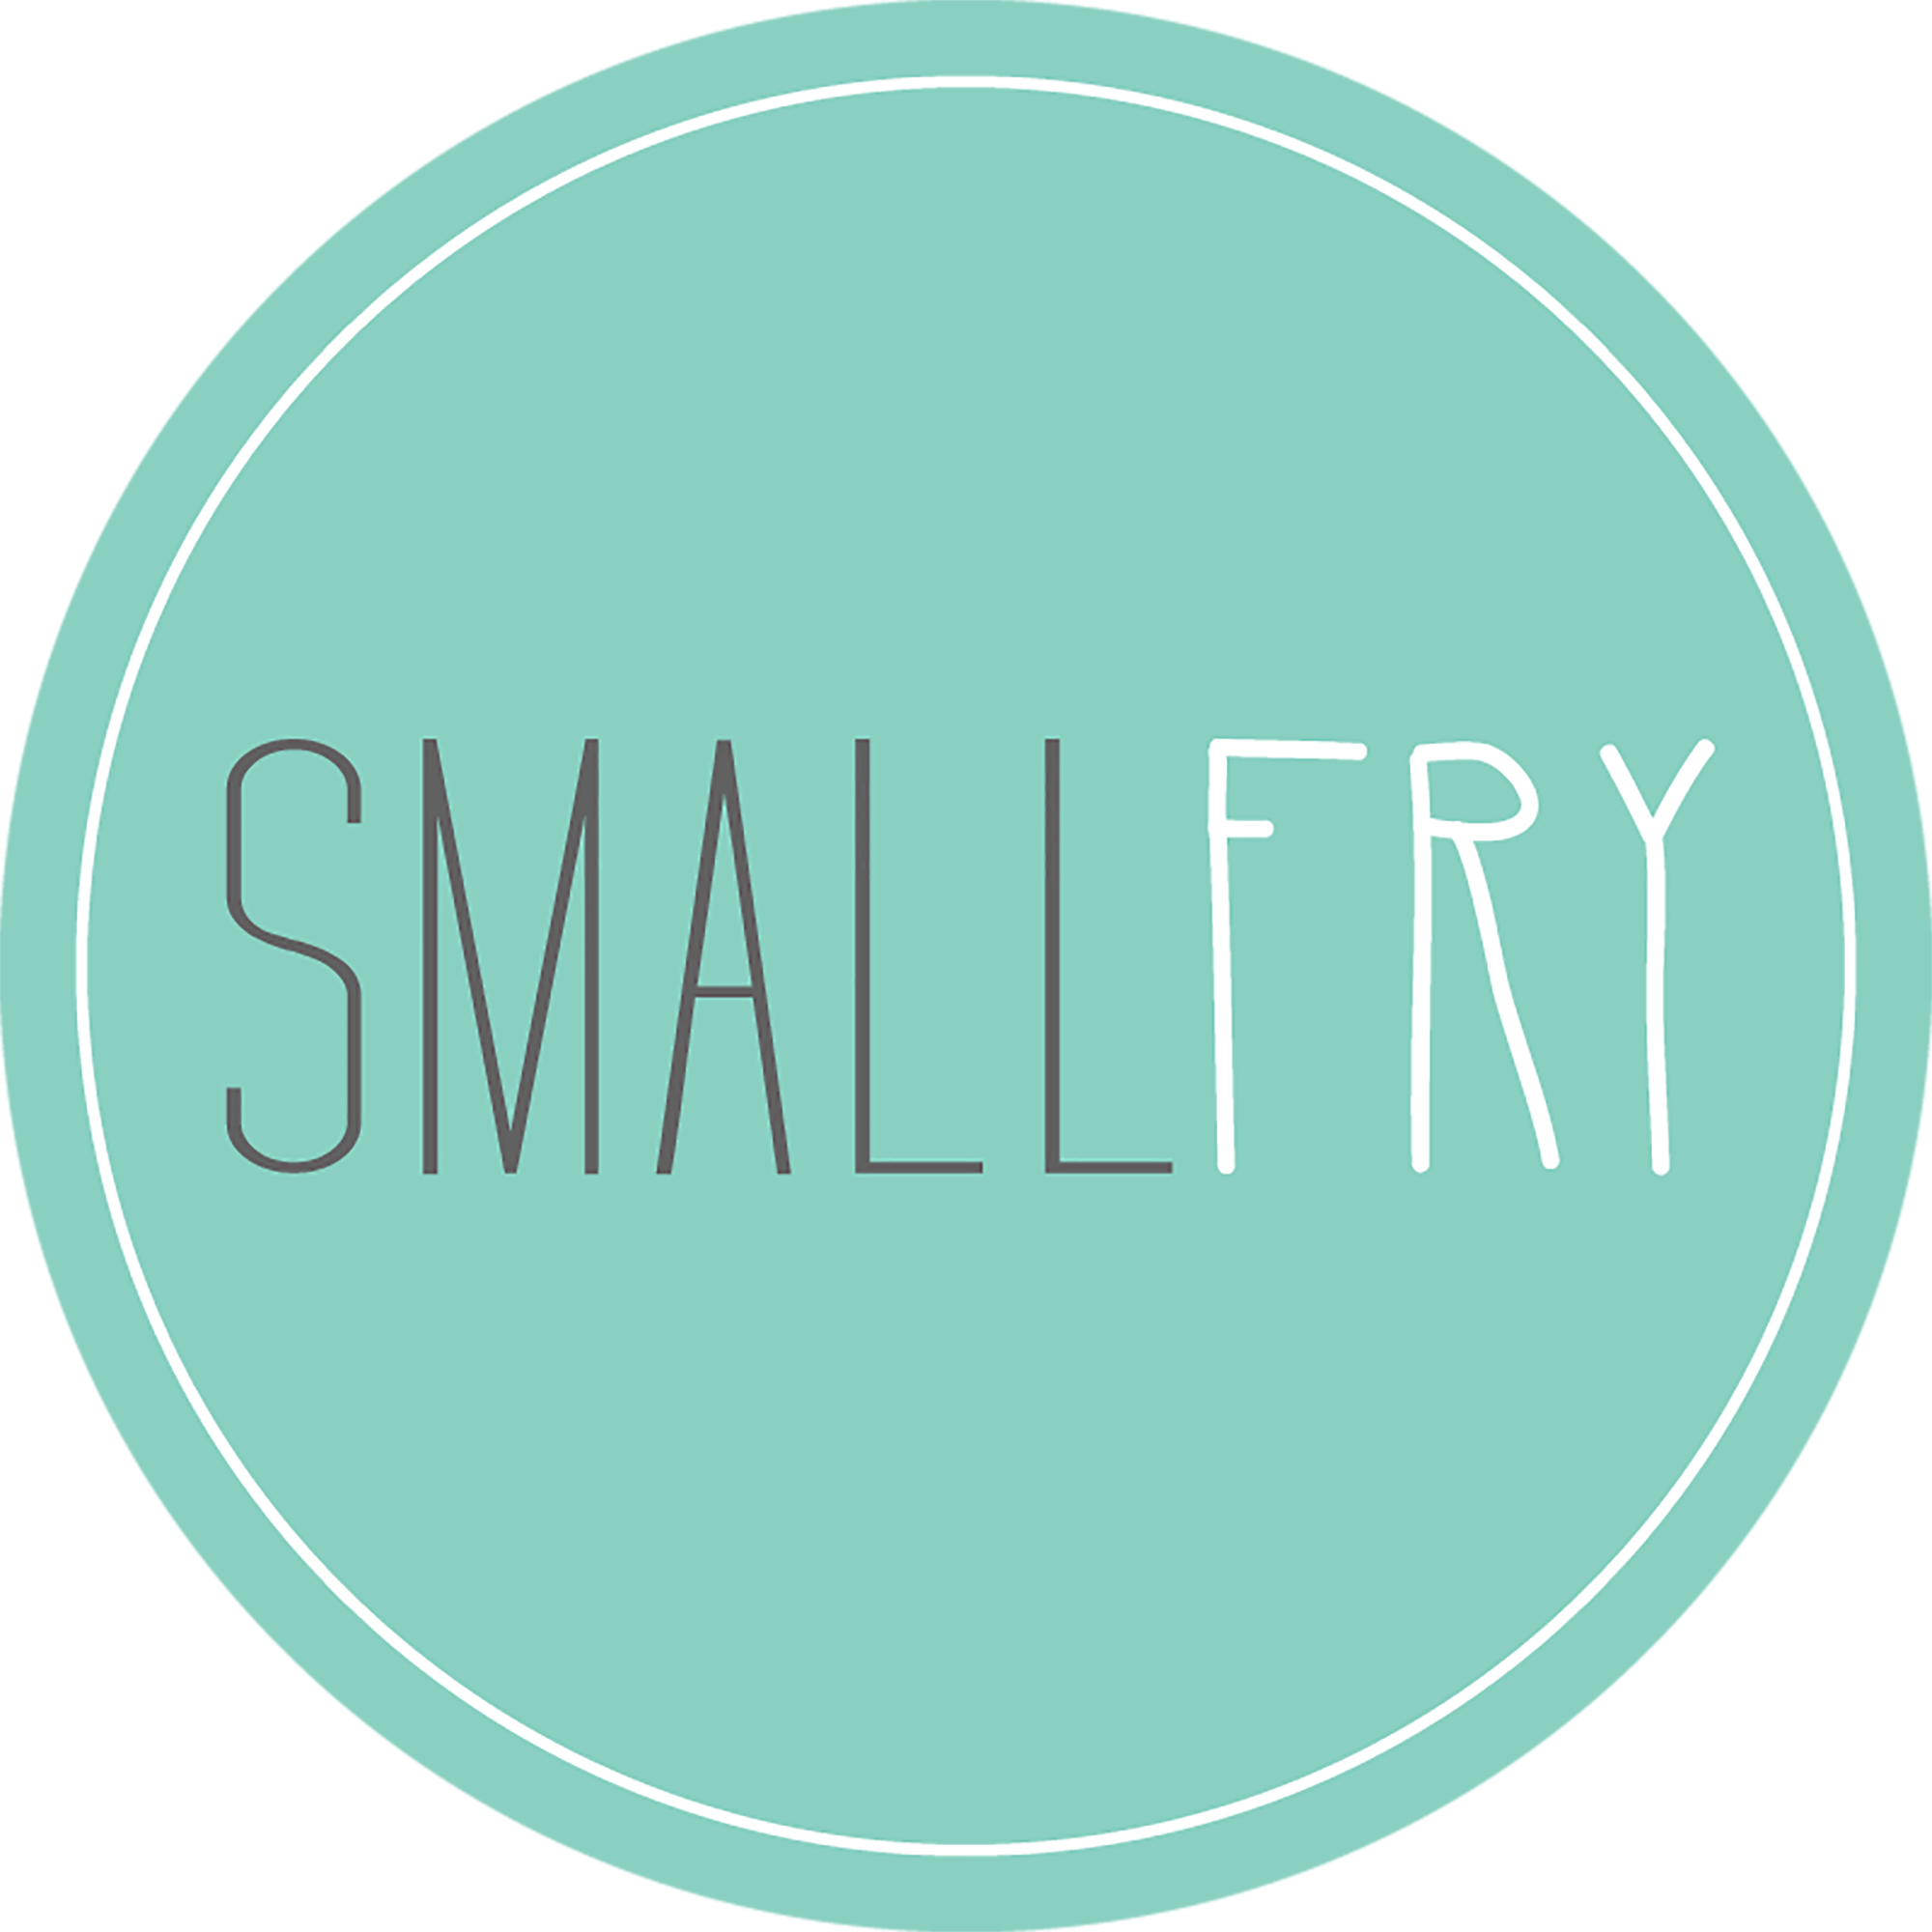 Smallfry